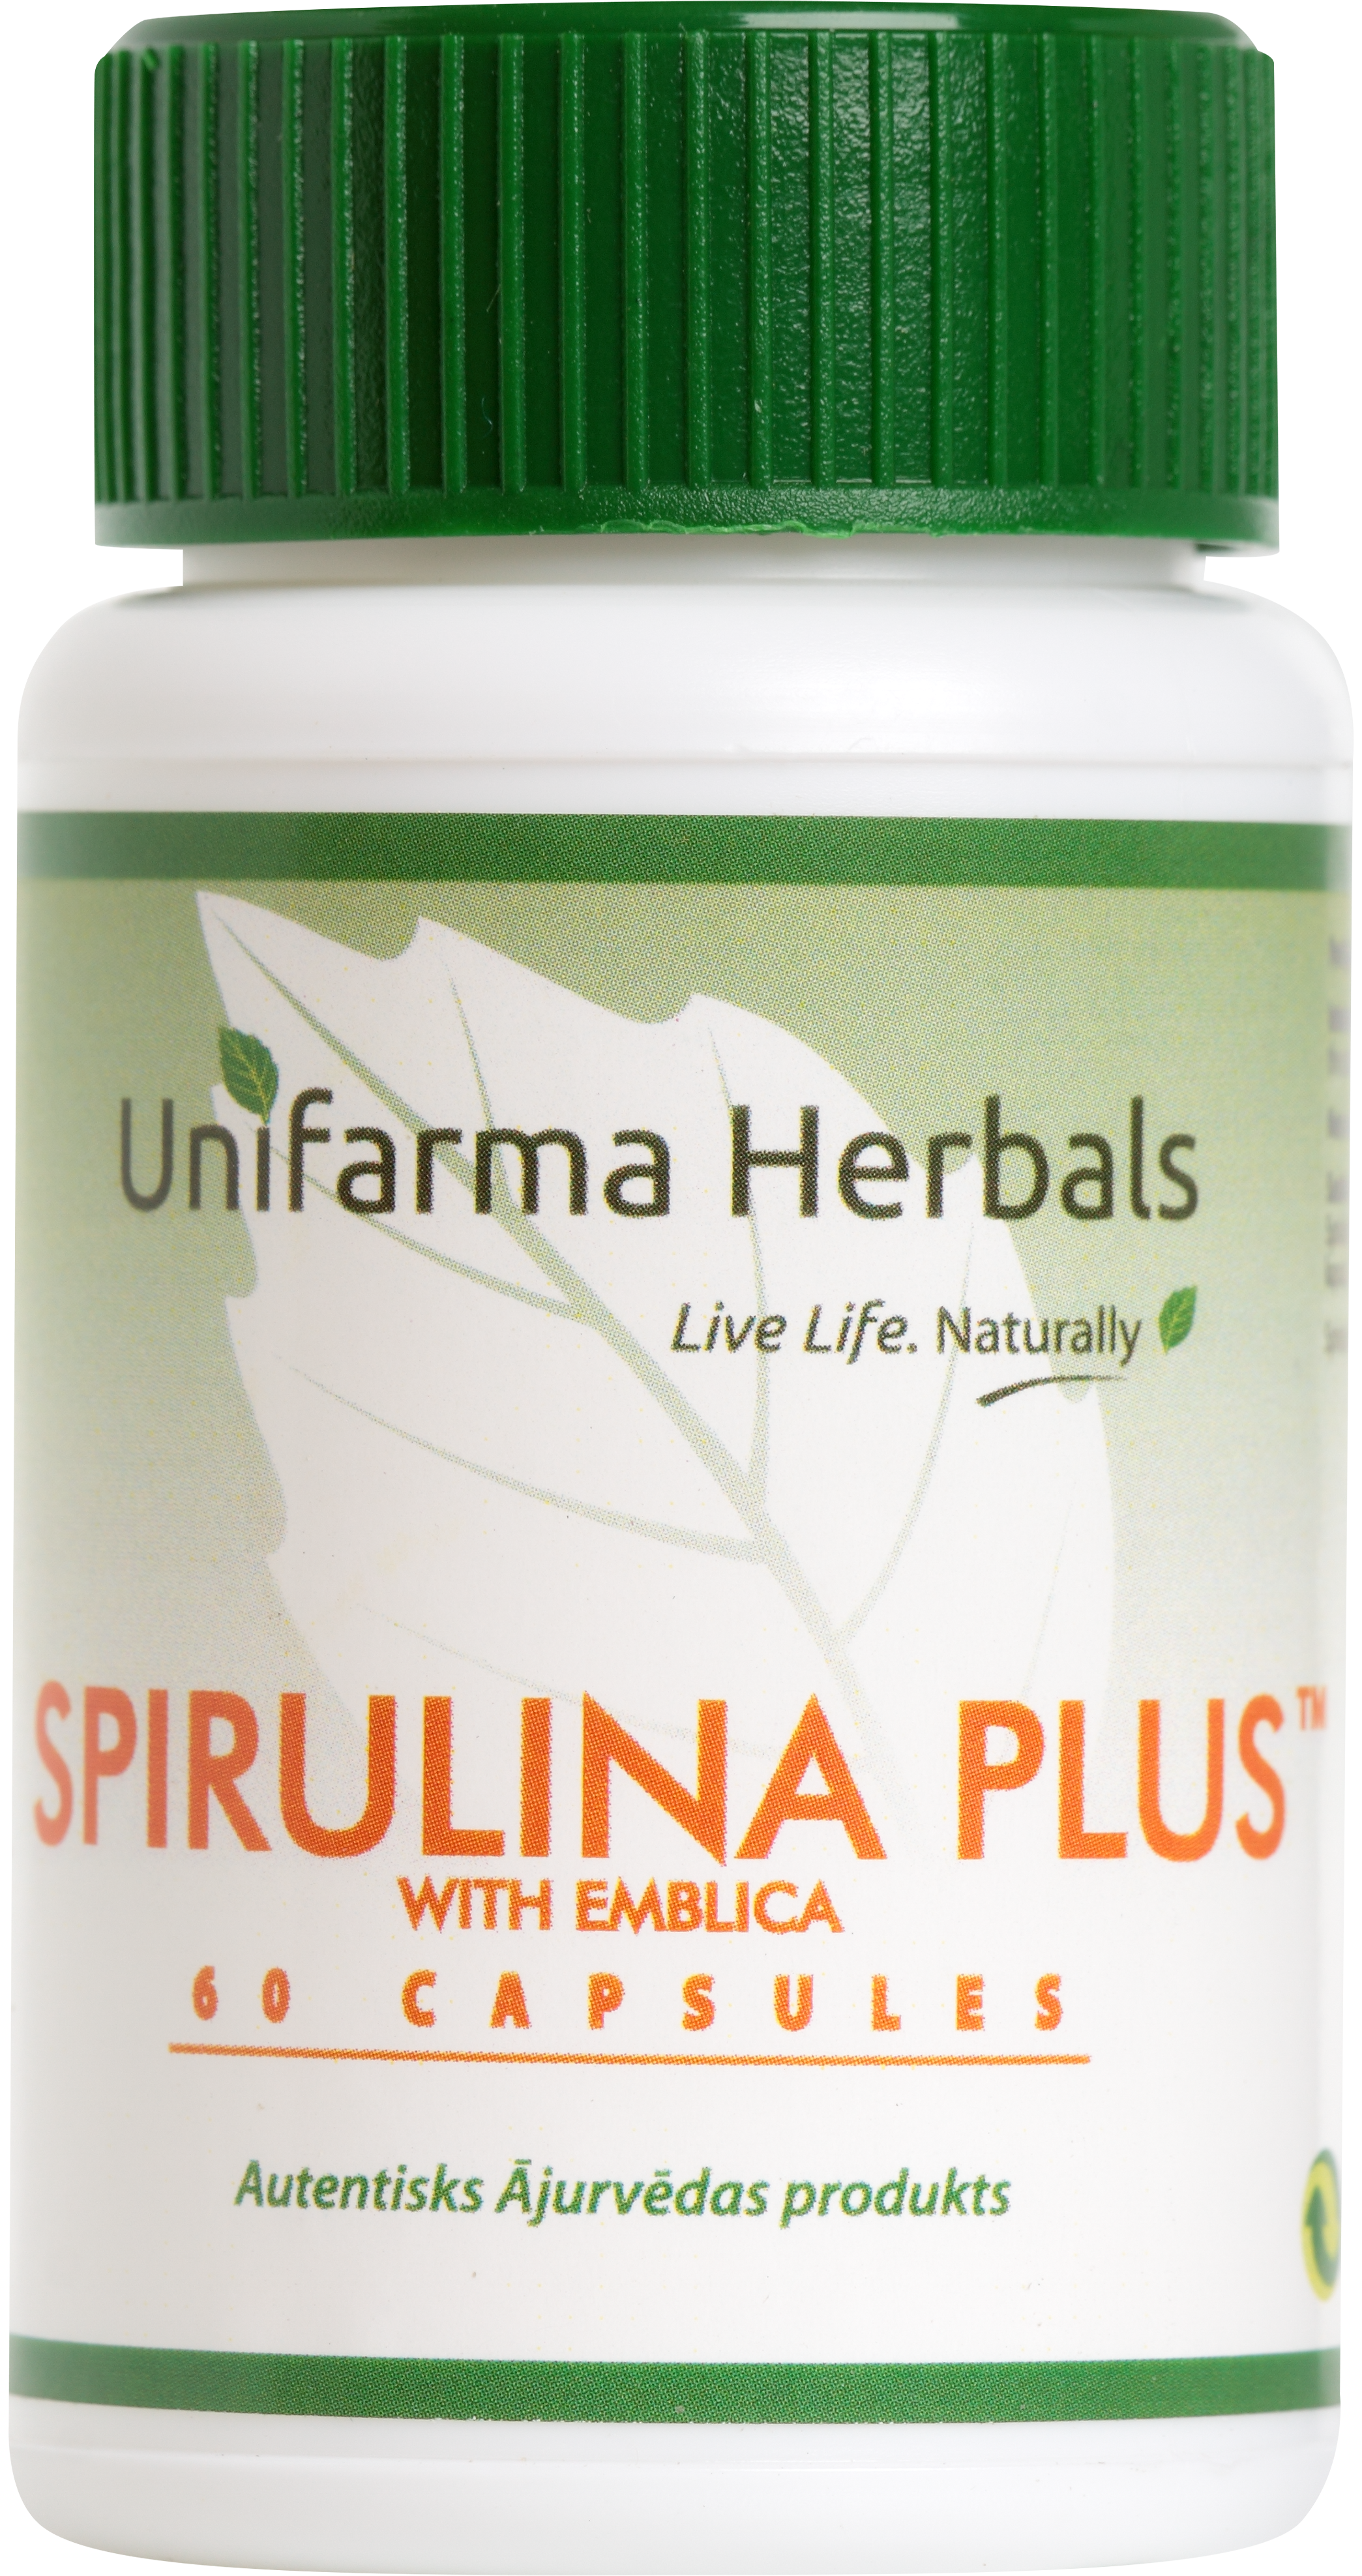 Unifarma Herbals Spirulina Plus